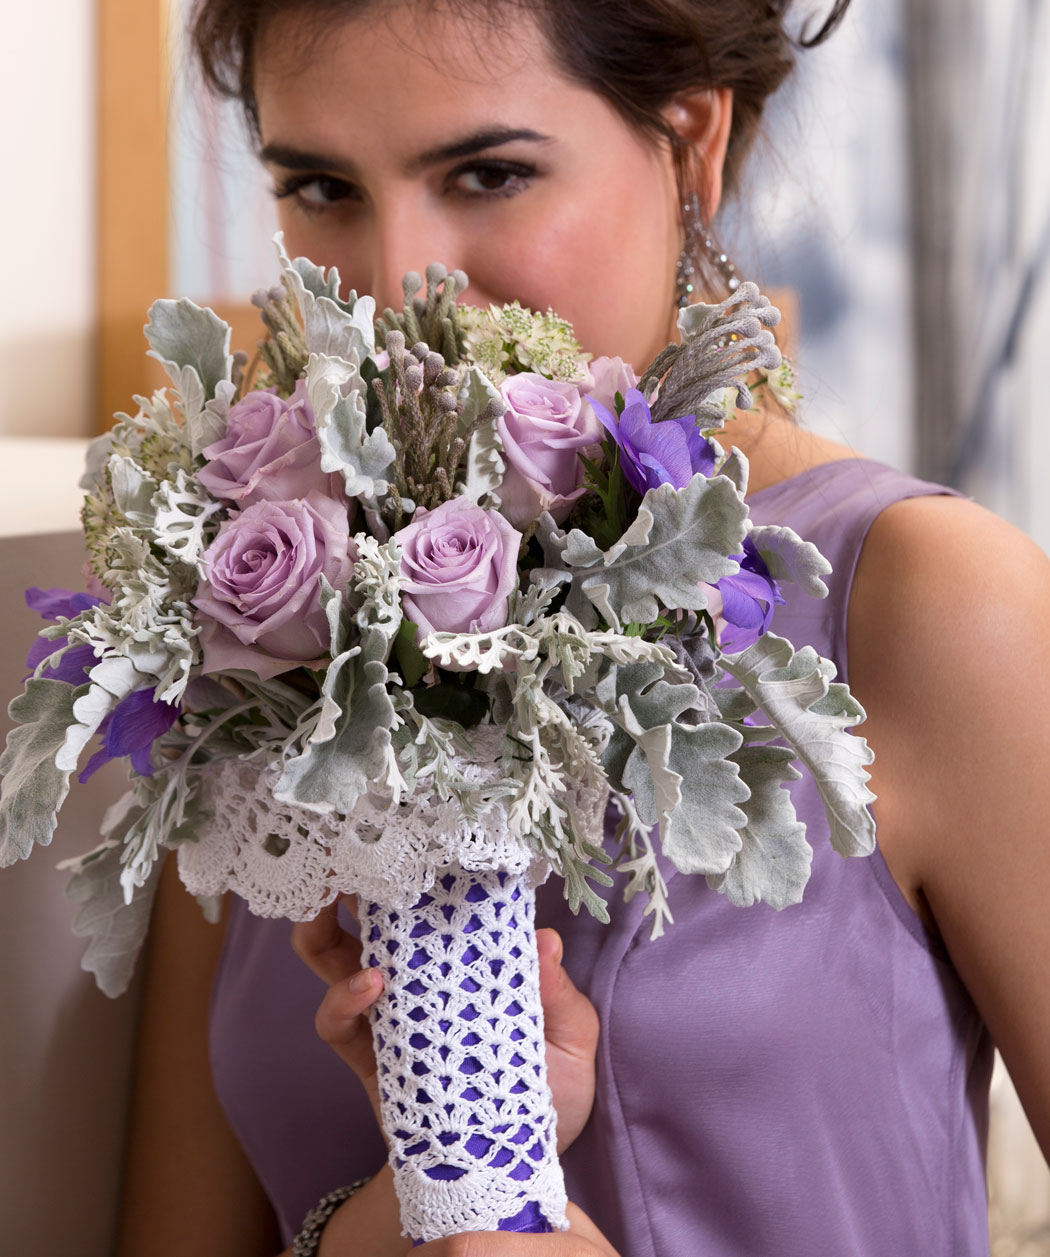 Crochet Wedding Dress Pattern Free Donnas Dozen Free Patterns For Your Wedding Day Red Heart